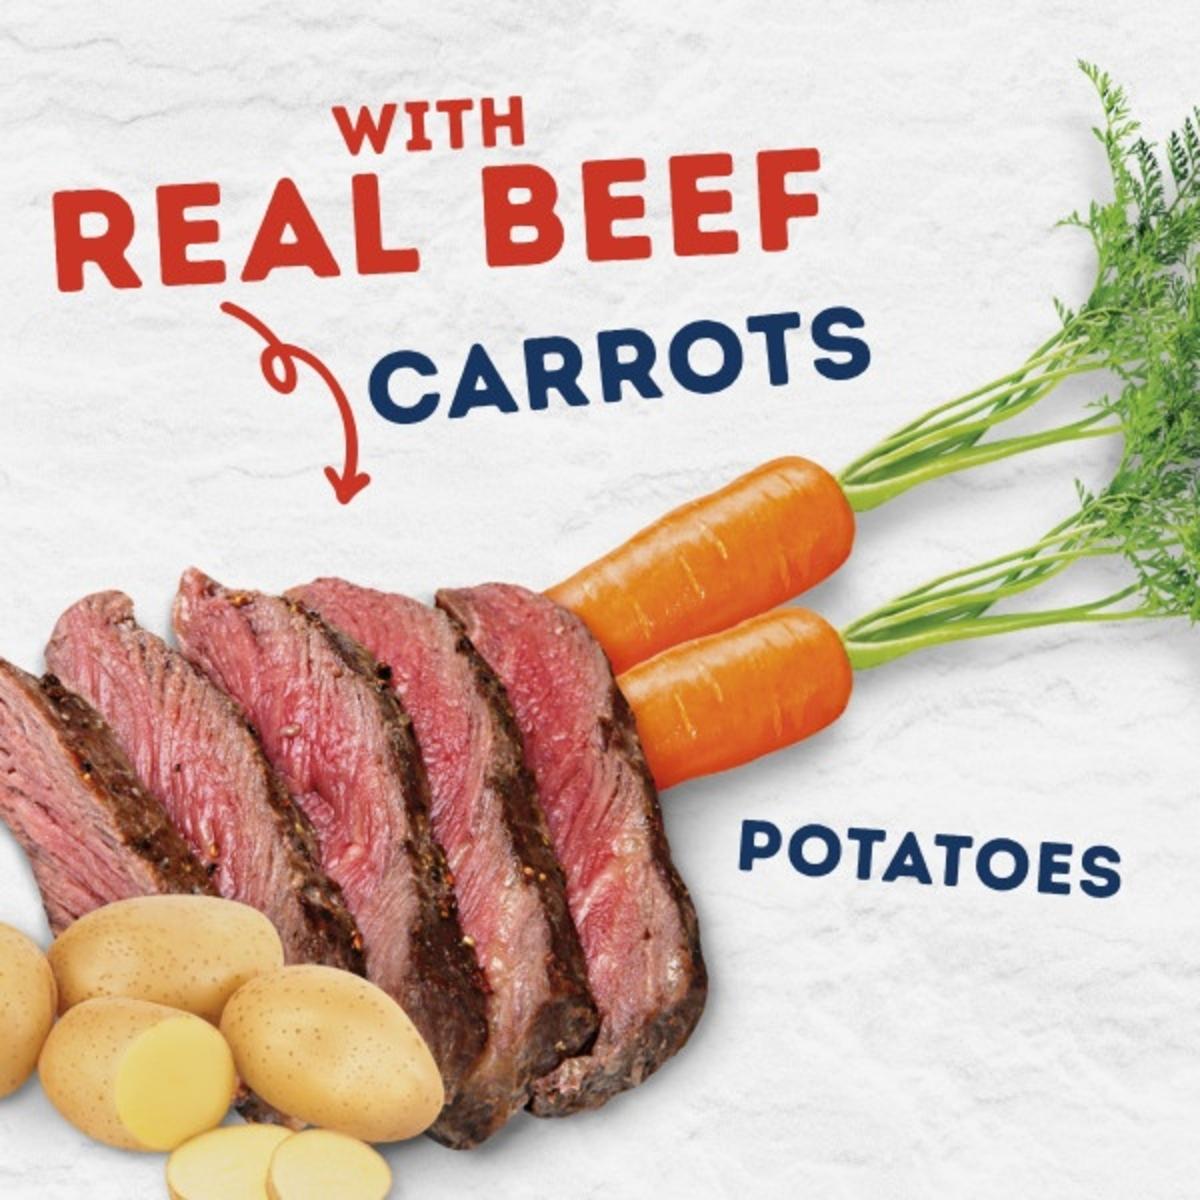 real beef carrots potatoes